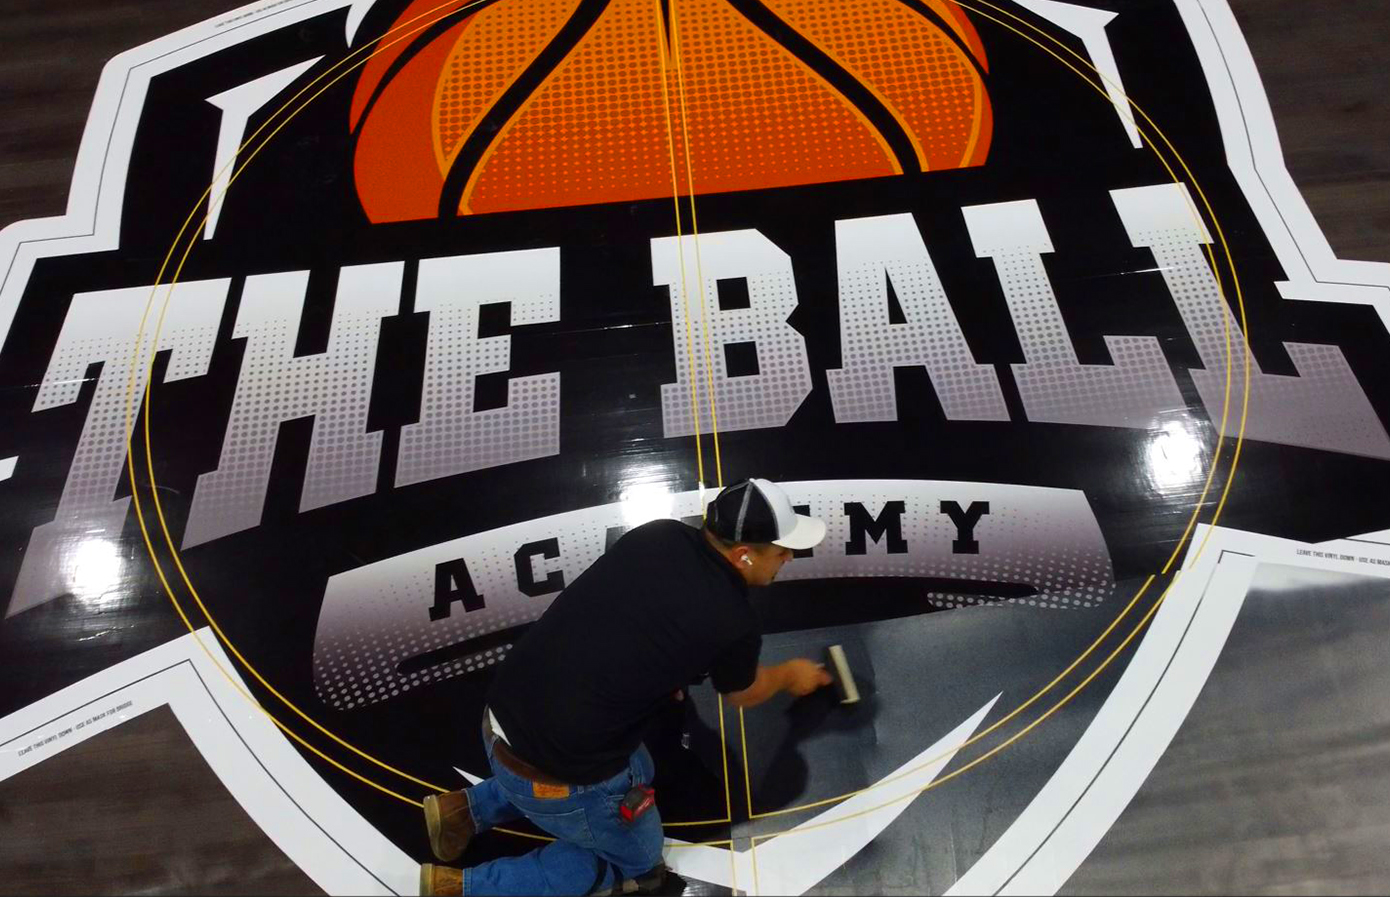 The Ball Academy - Court 1